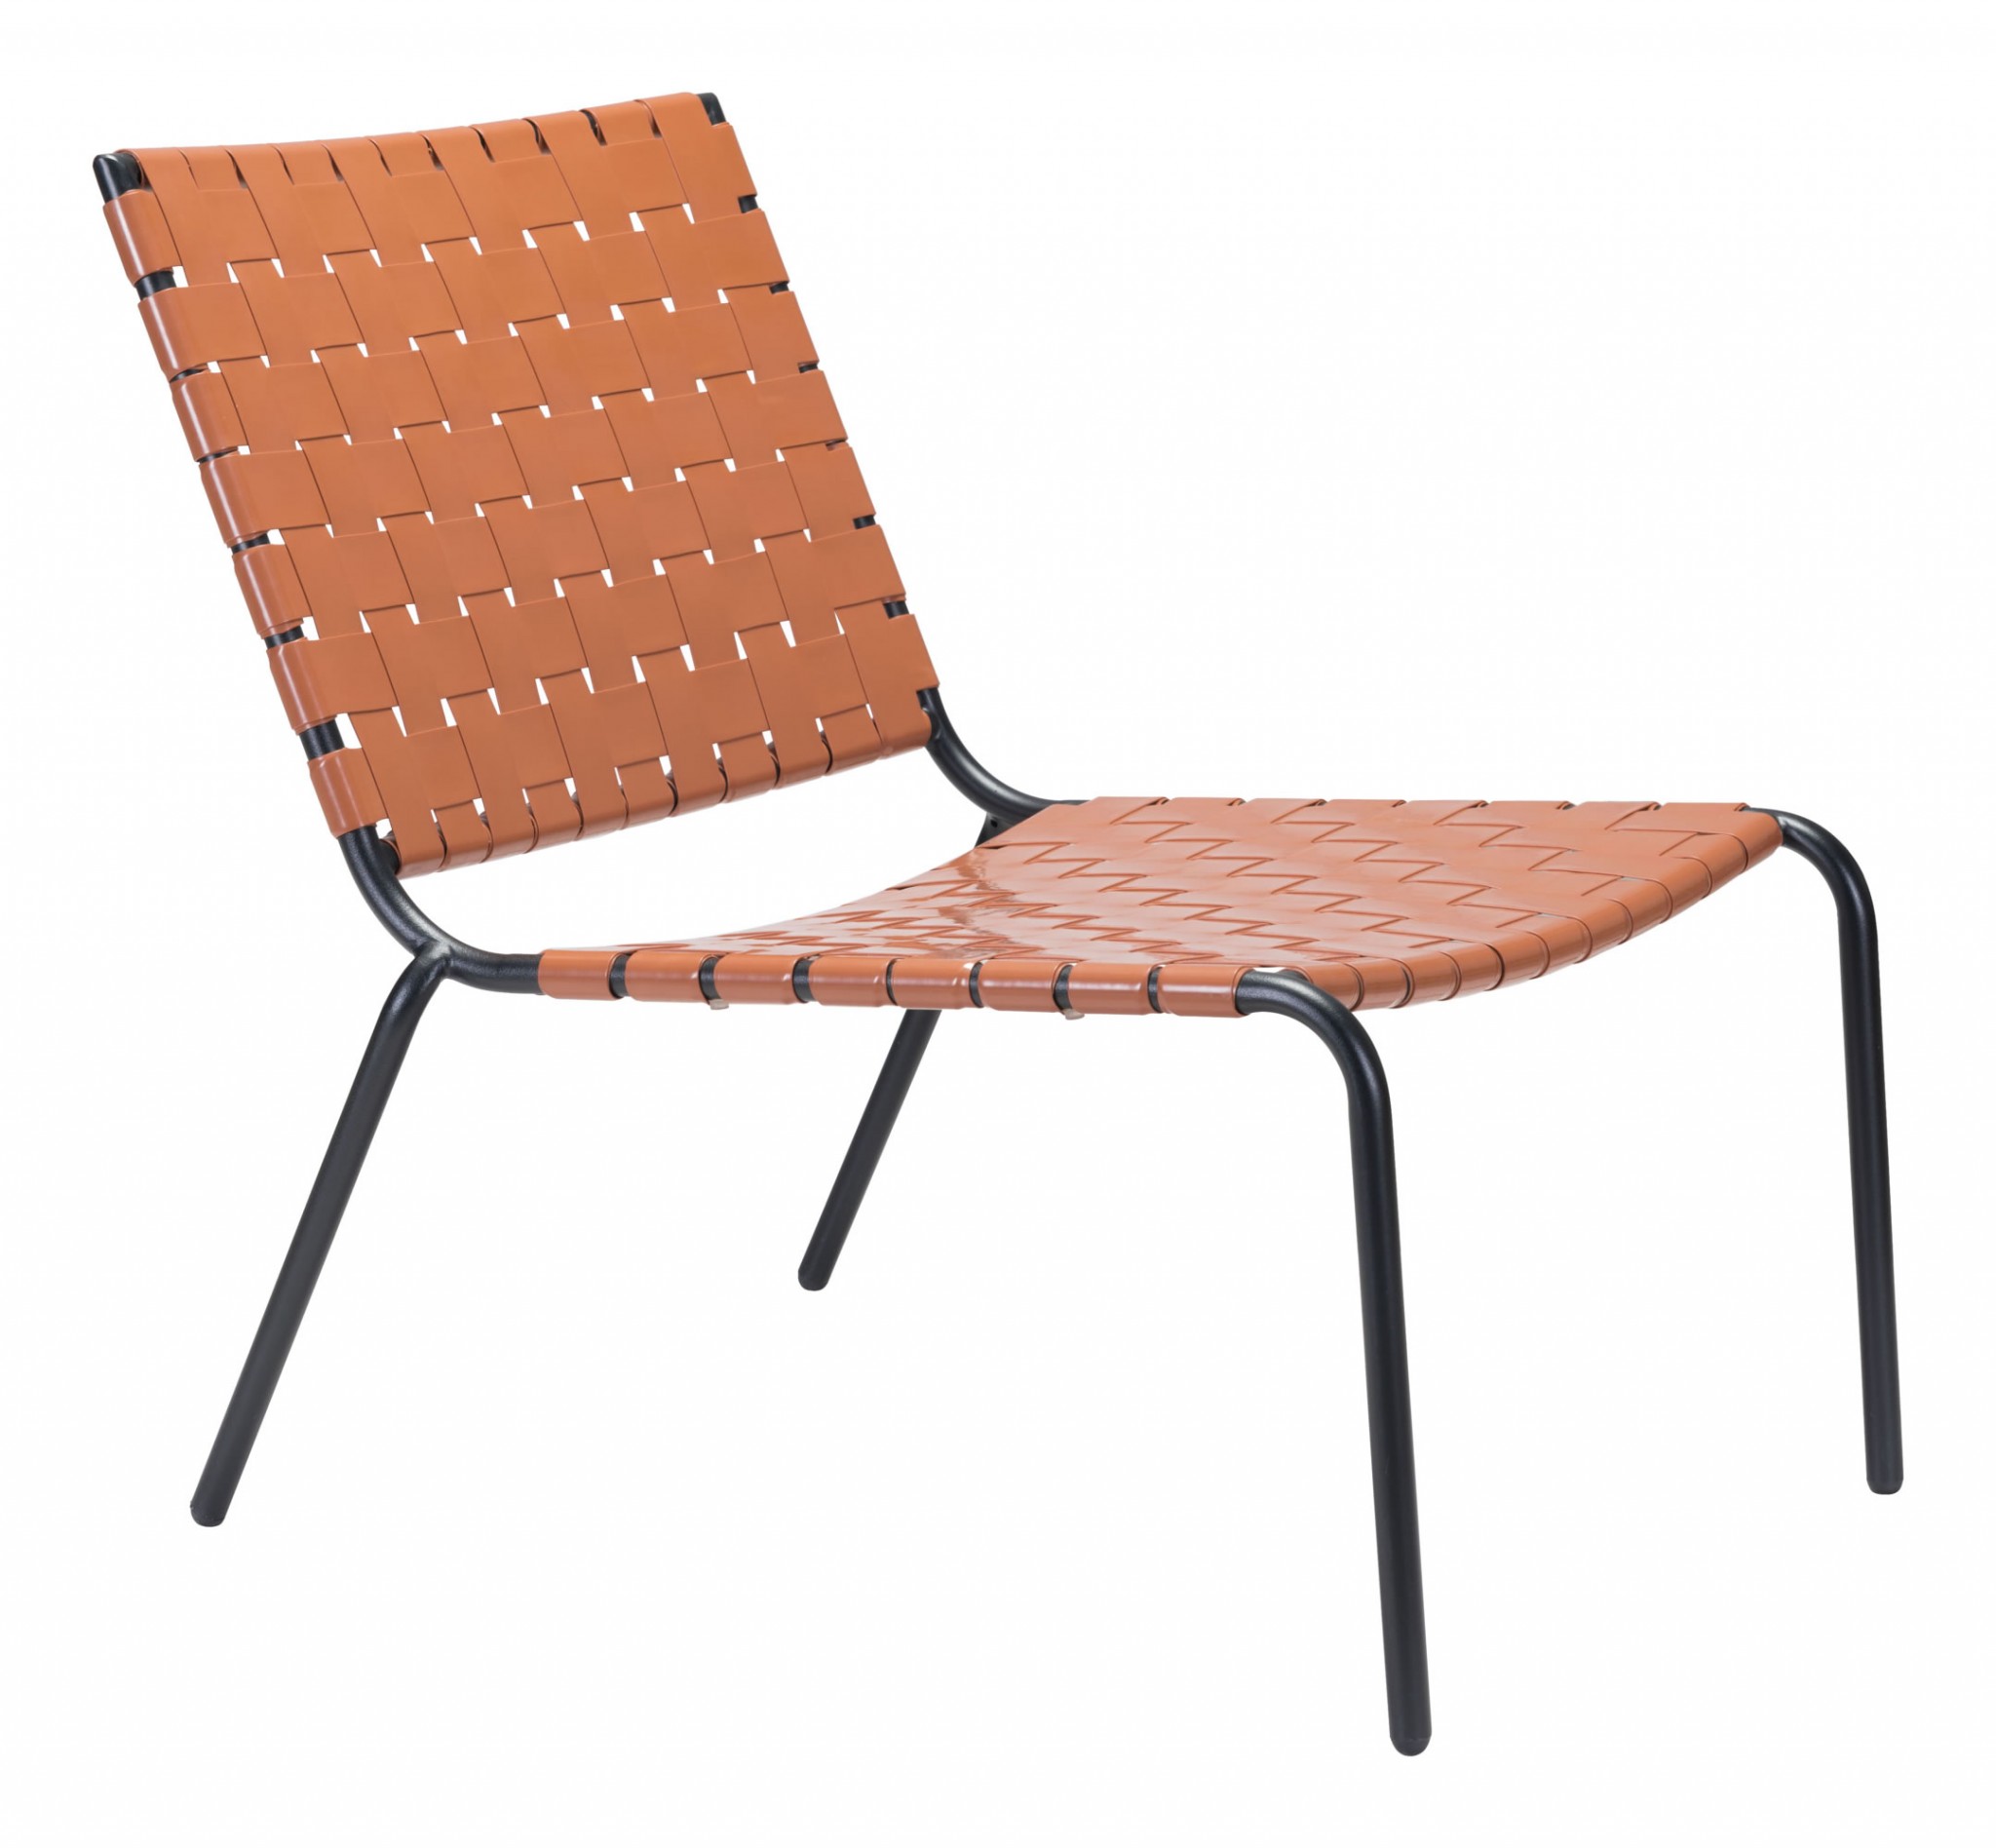 26.4" x 35.8" x 31.5" Tan, PVC, Steel, Lounge Chair